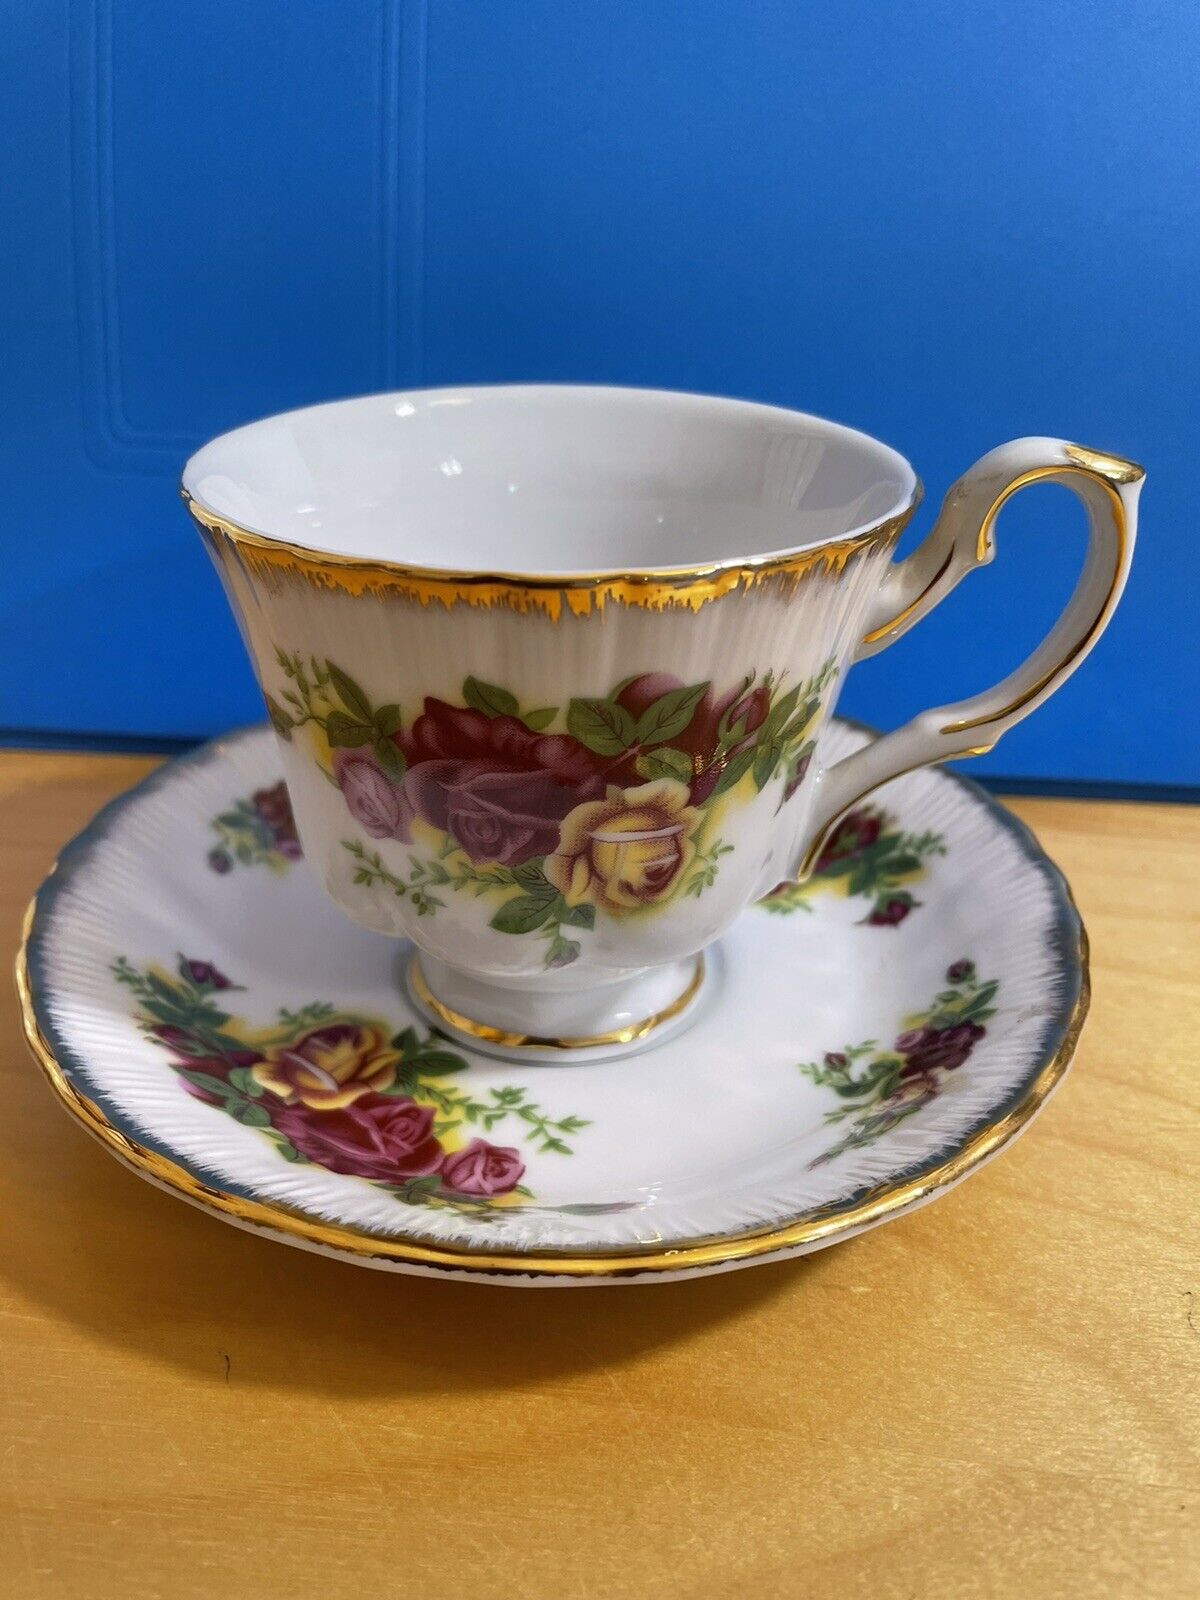 Yusui porcelain cup and saucer 24K GP floral